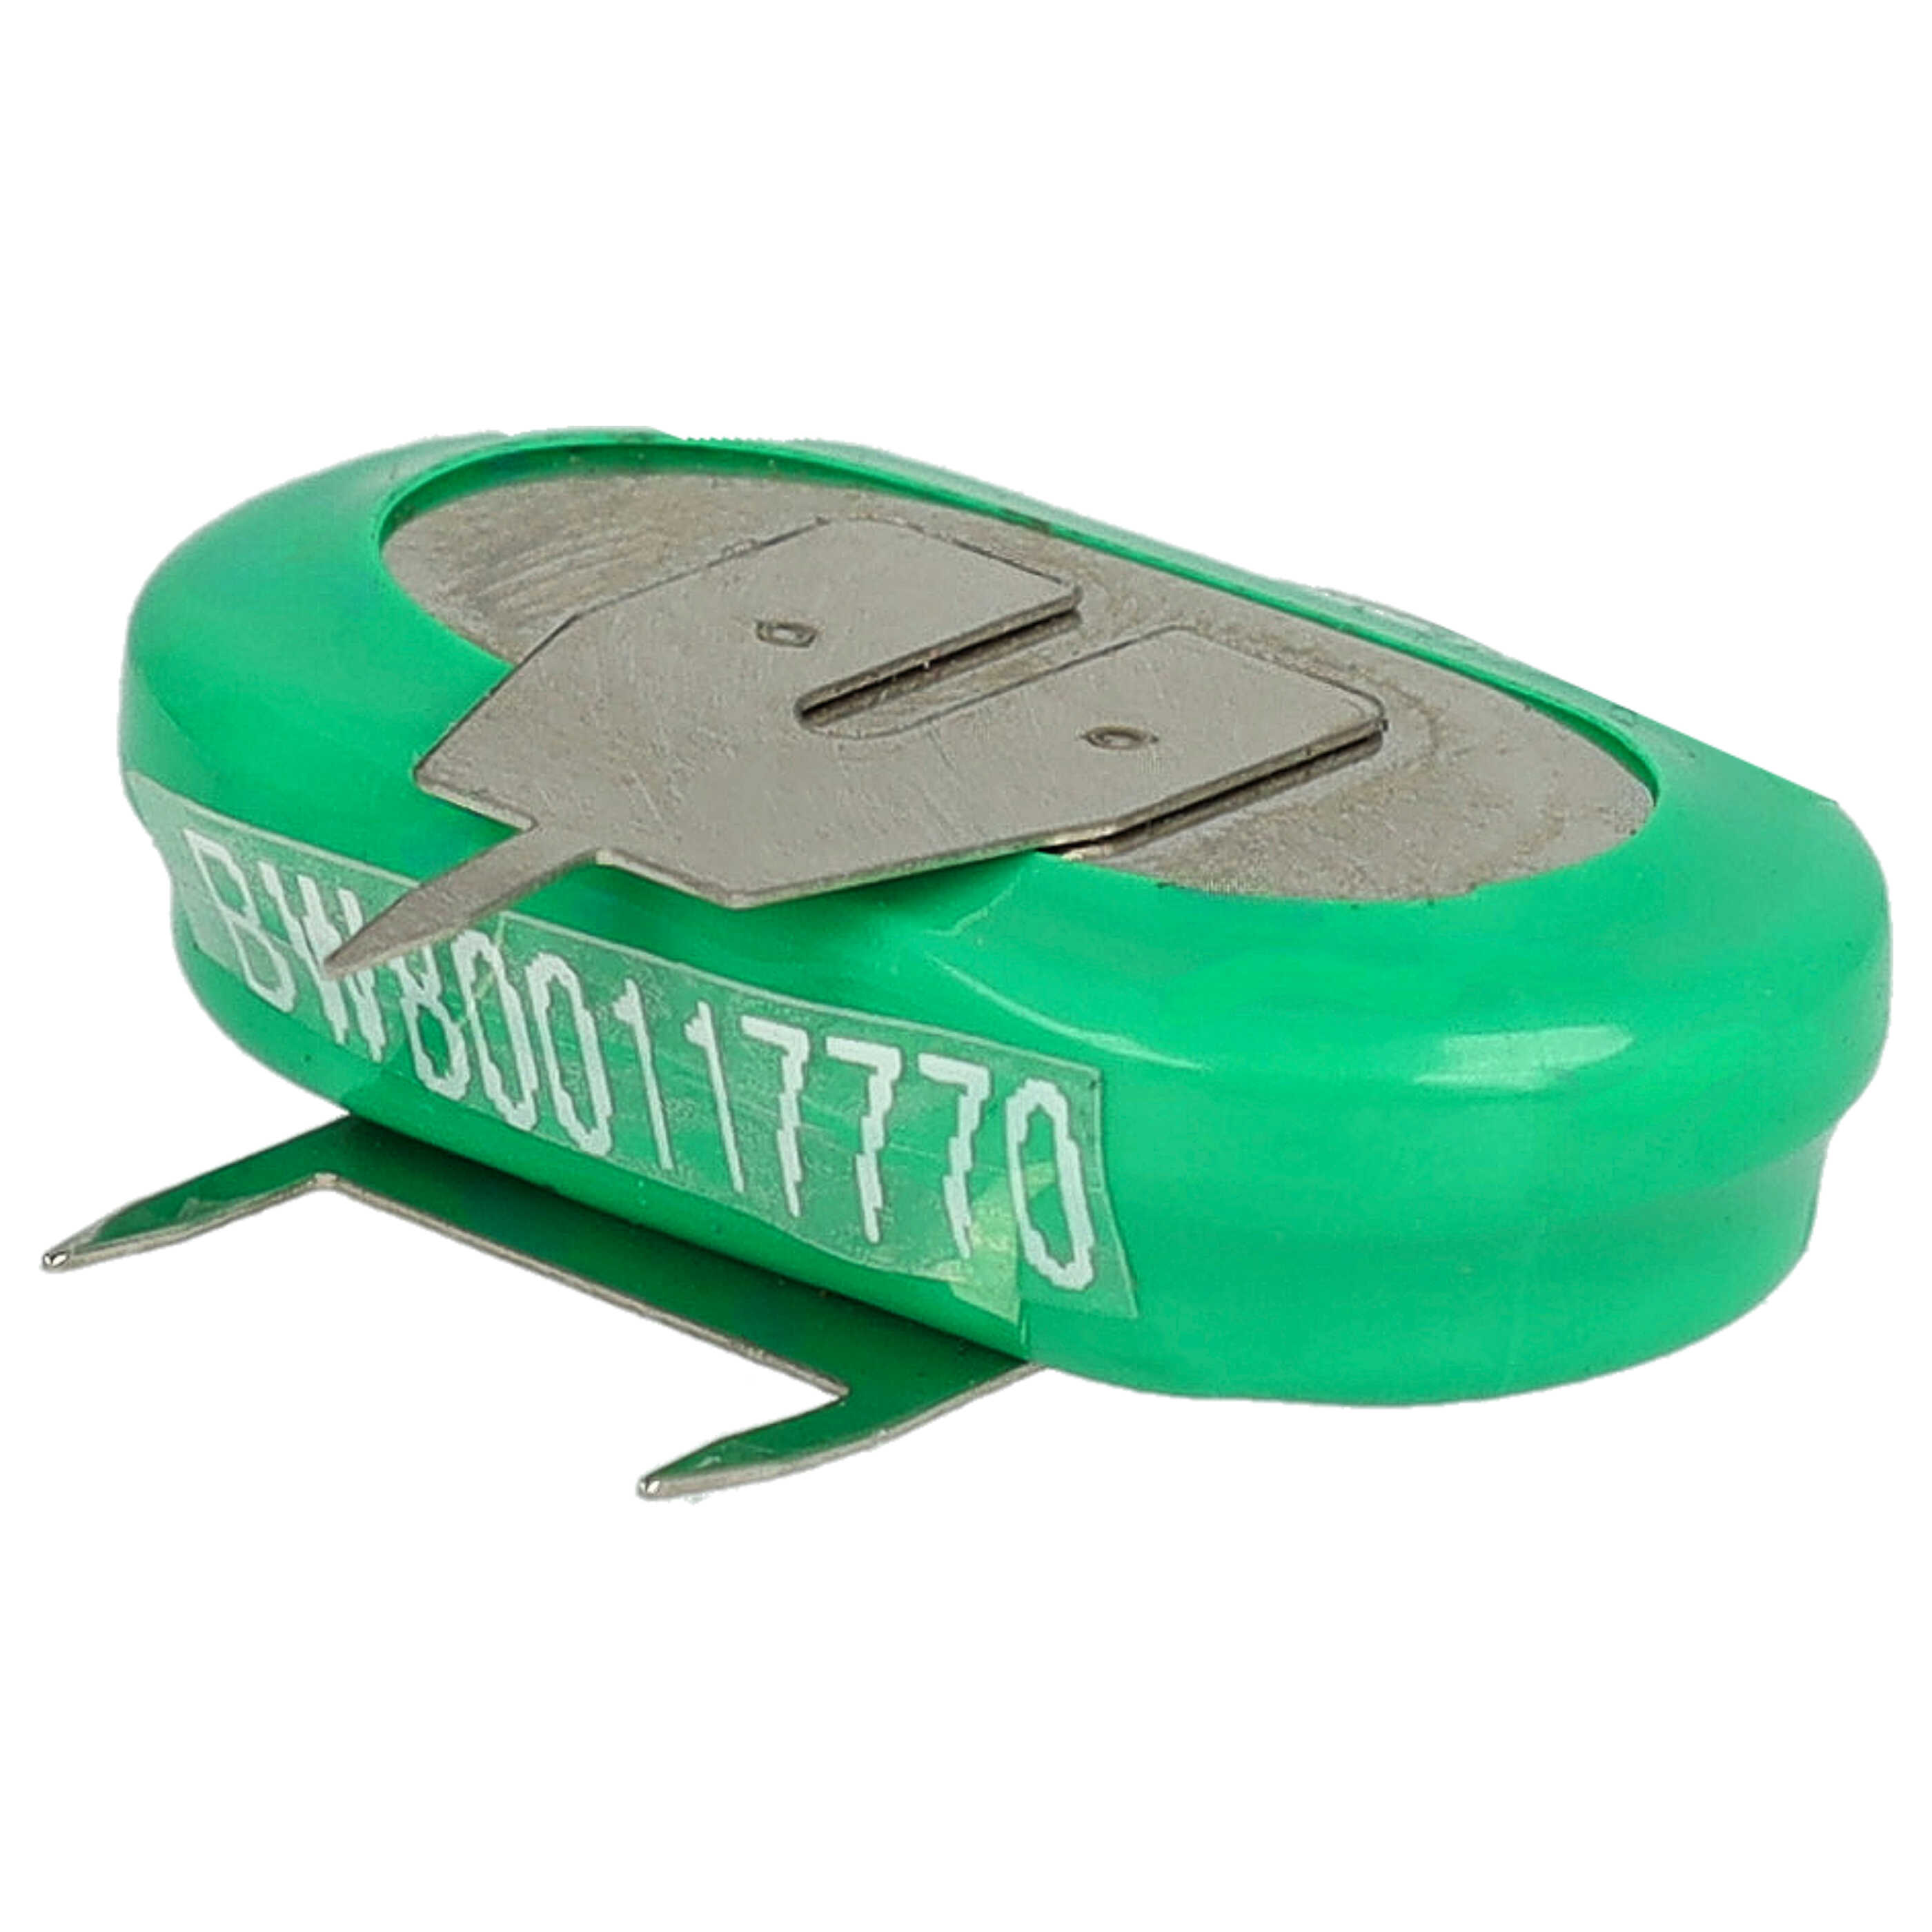 Knopfzellen-Akku (1x Zelle) Typ 1/V150H 3 Pins für Modellbau-Akkus Solar-Leuchten uvm. - 150mAh 1,2V NiMH